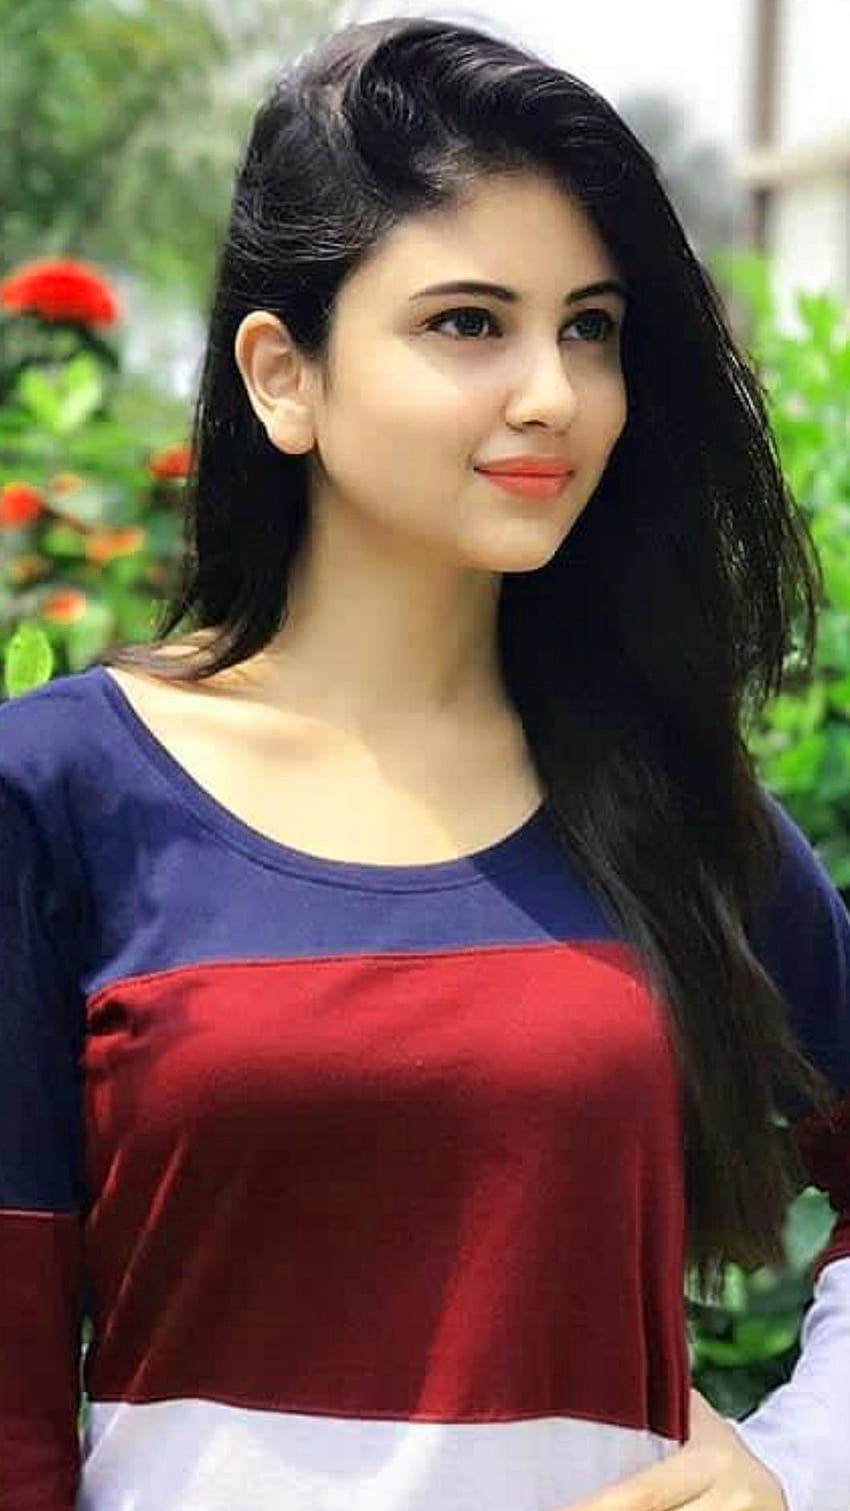 Gadis Cantik India, wanita India yang cantik wallpaper ponsel HD